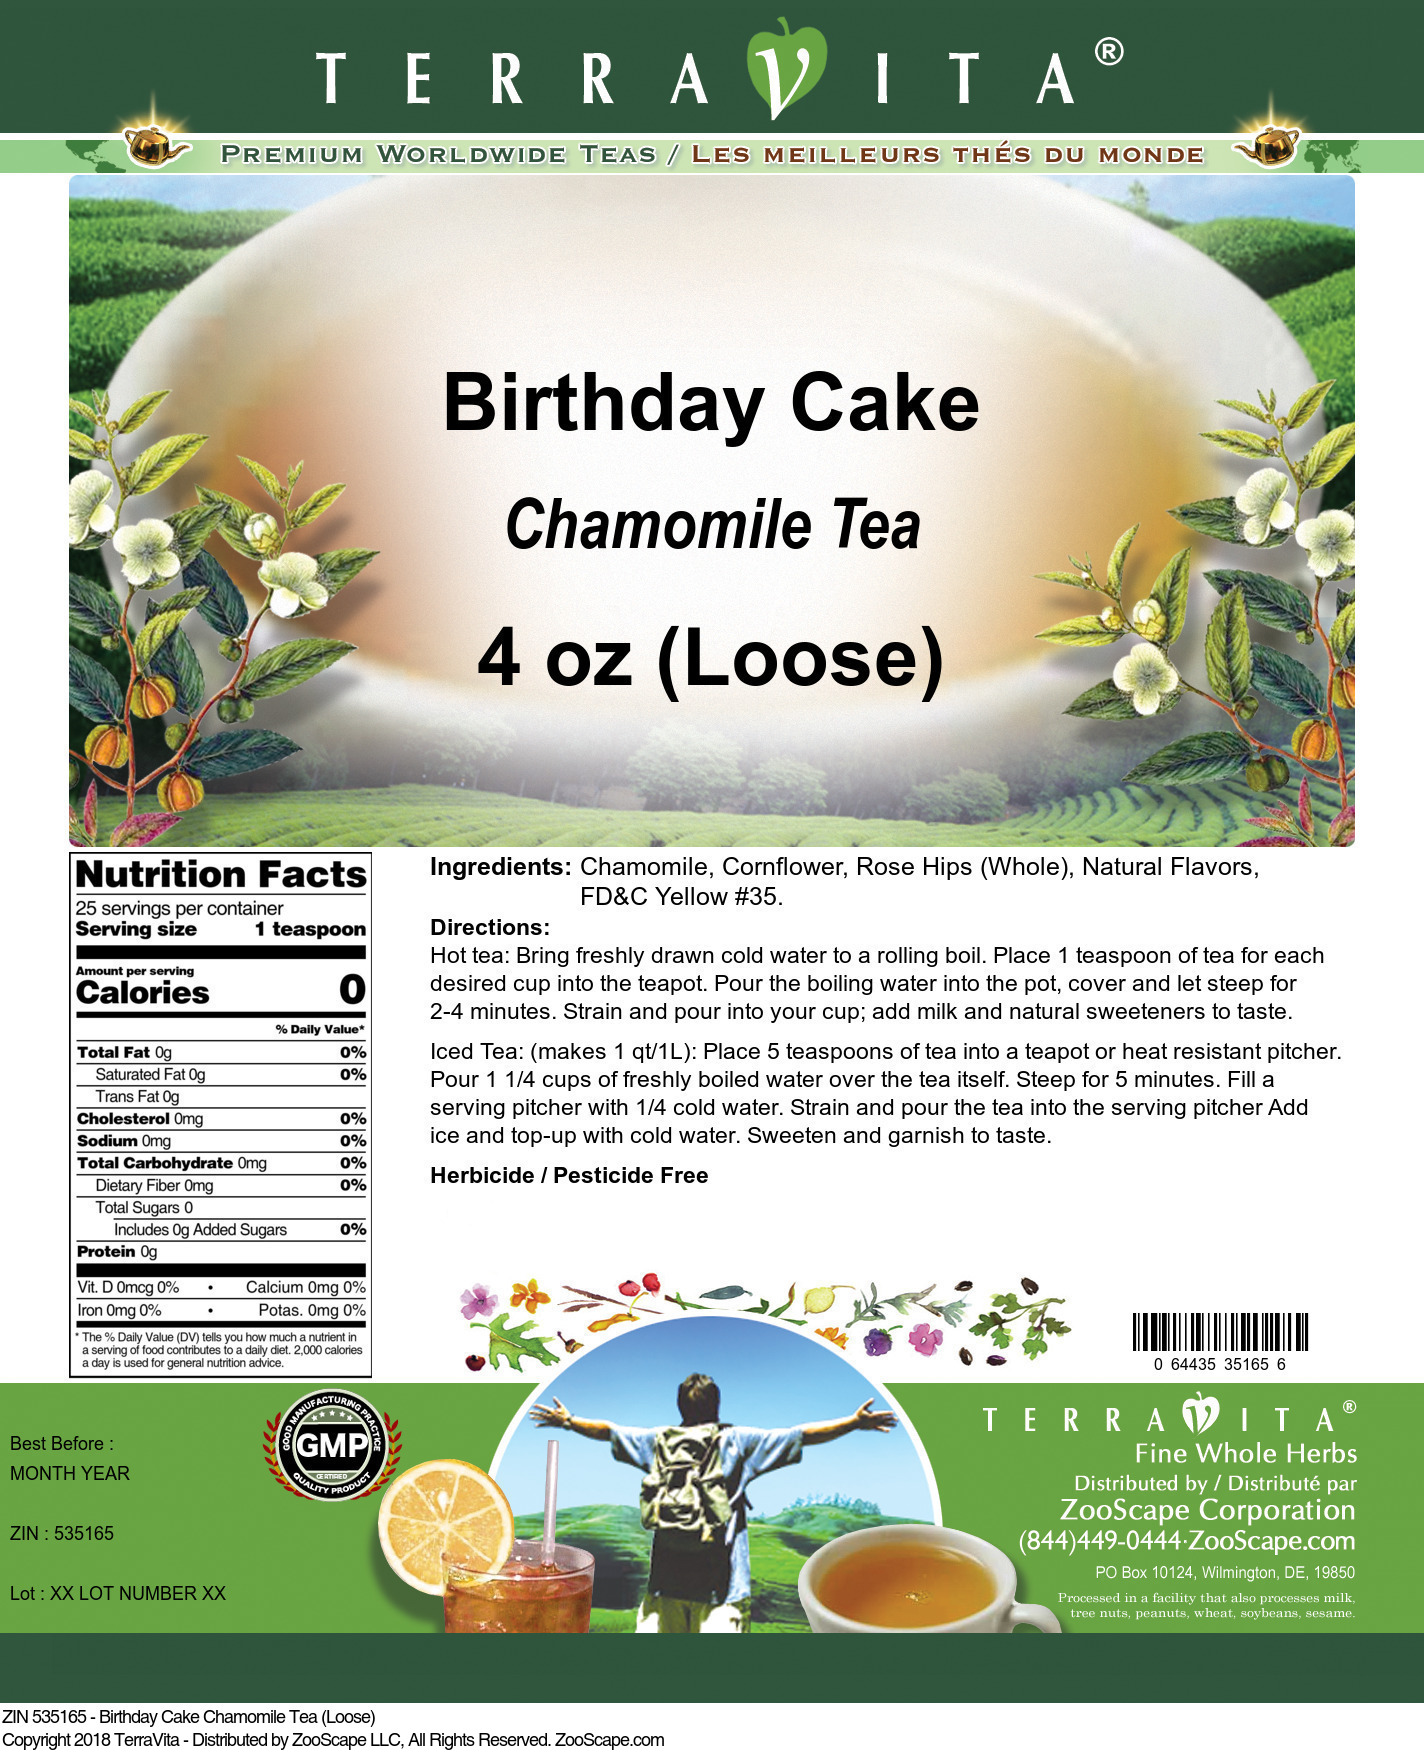 Birthday Cake Chamomile Tea (Loose) - Label